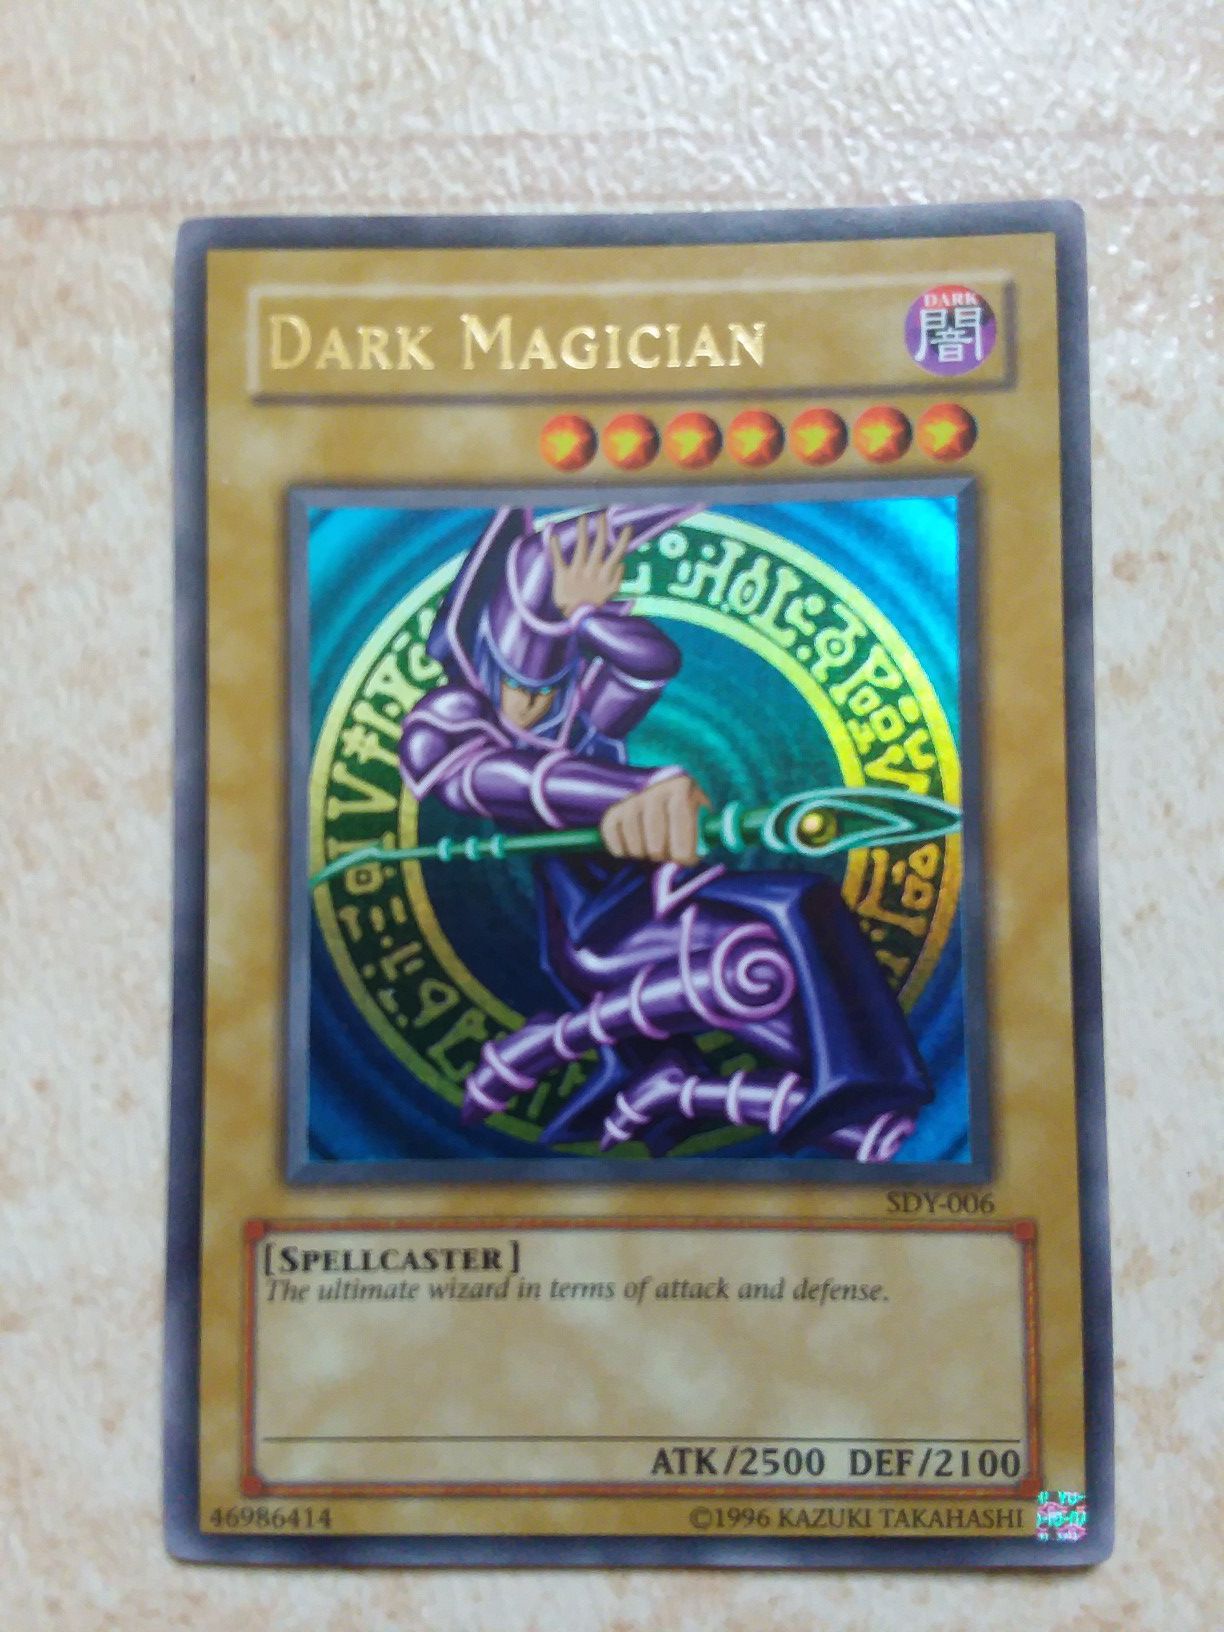 1x Dark Magician - PL SDY-006 Holo Foil Ultra Rare - YuGiOh Card.